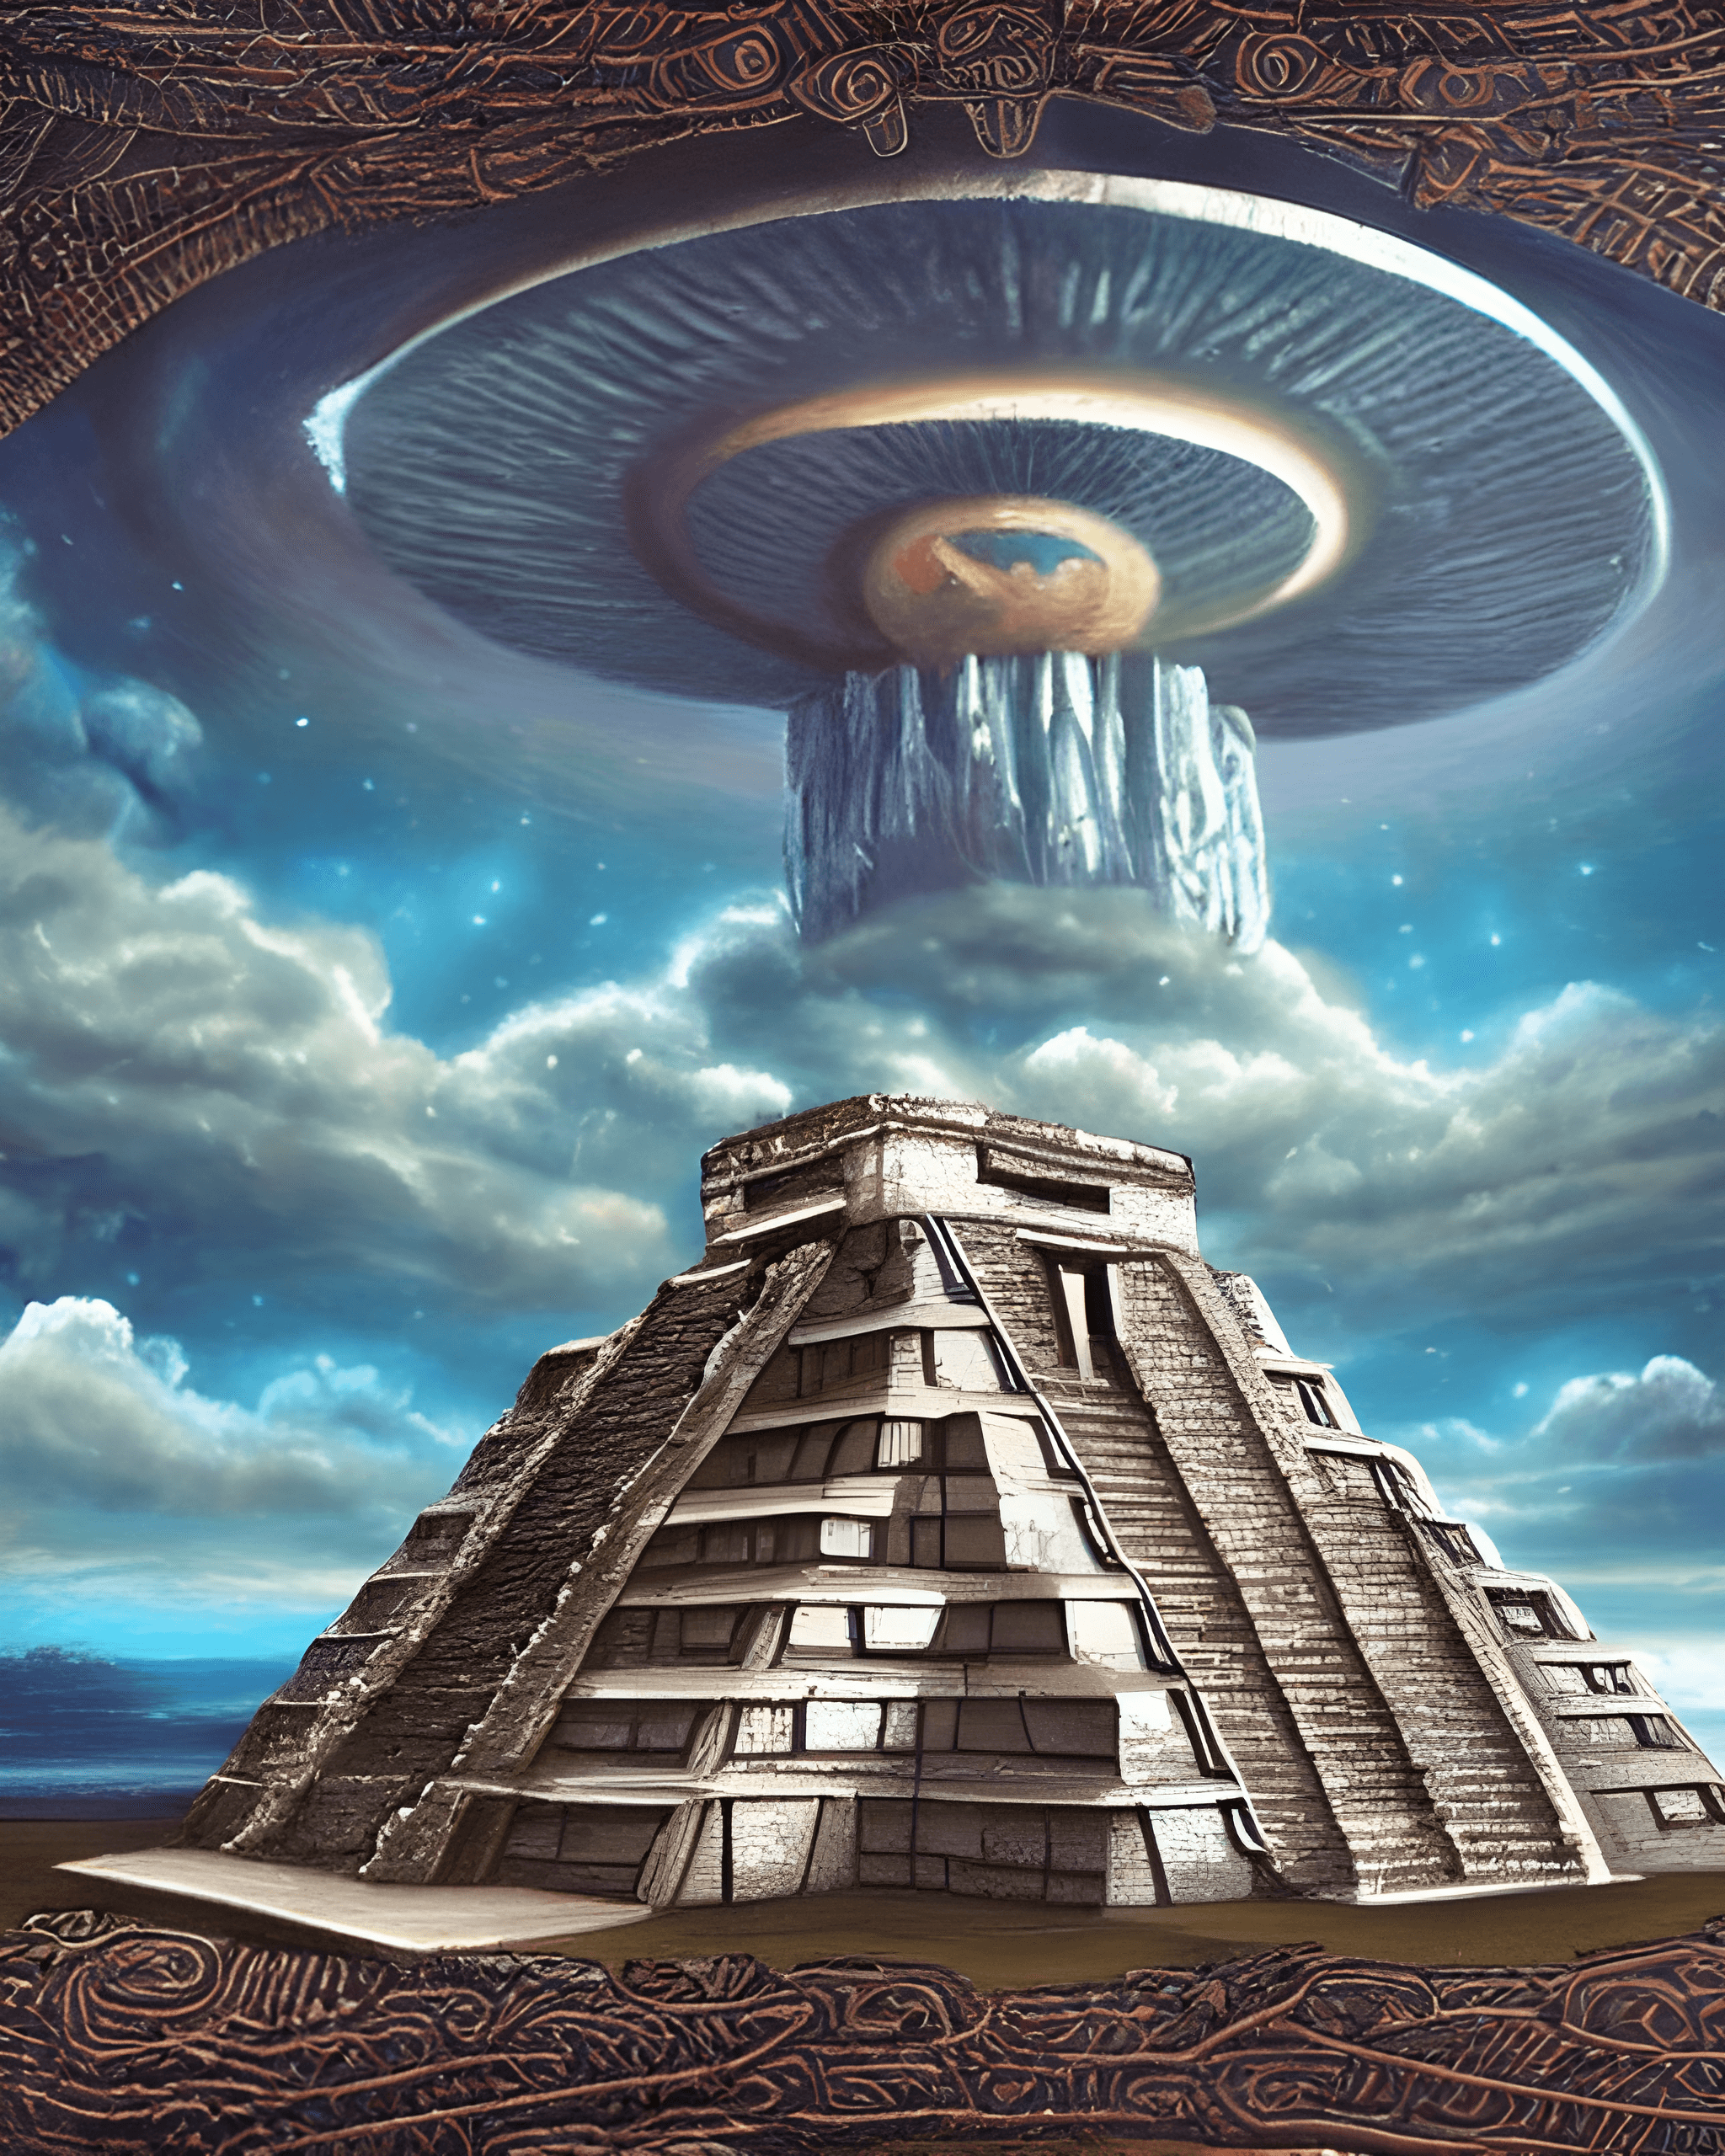 Mayan Gods Return